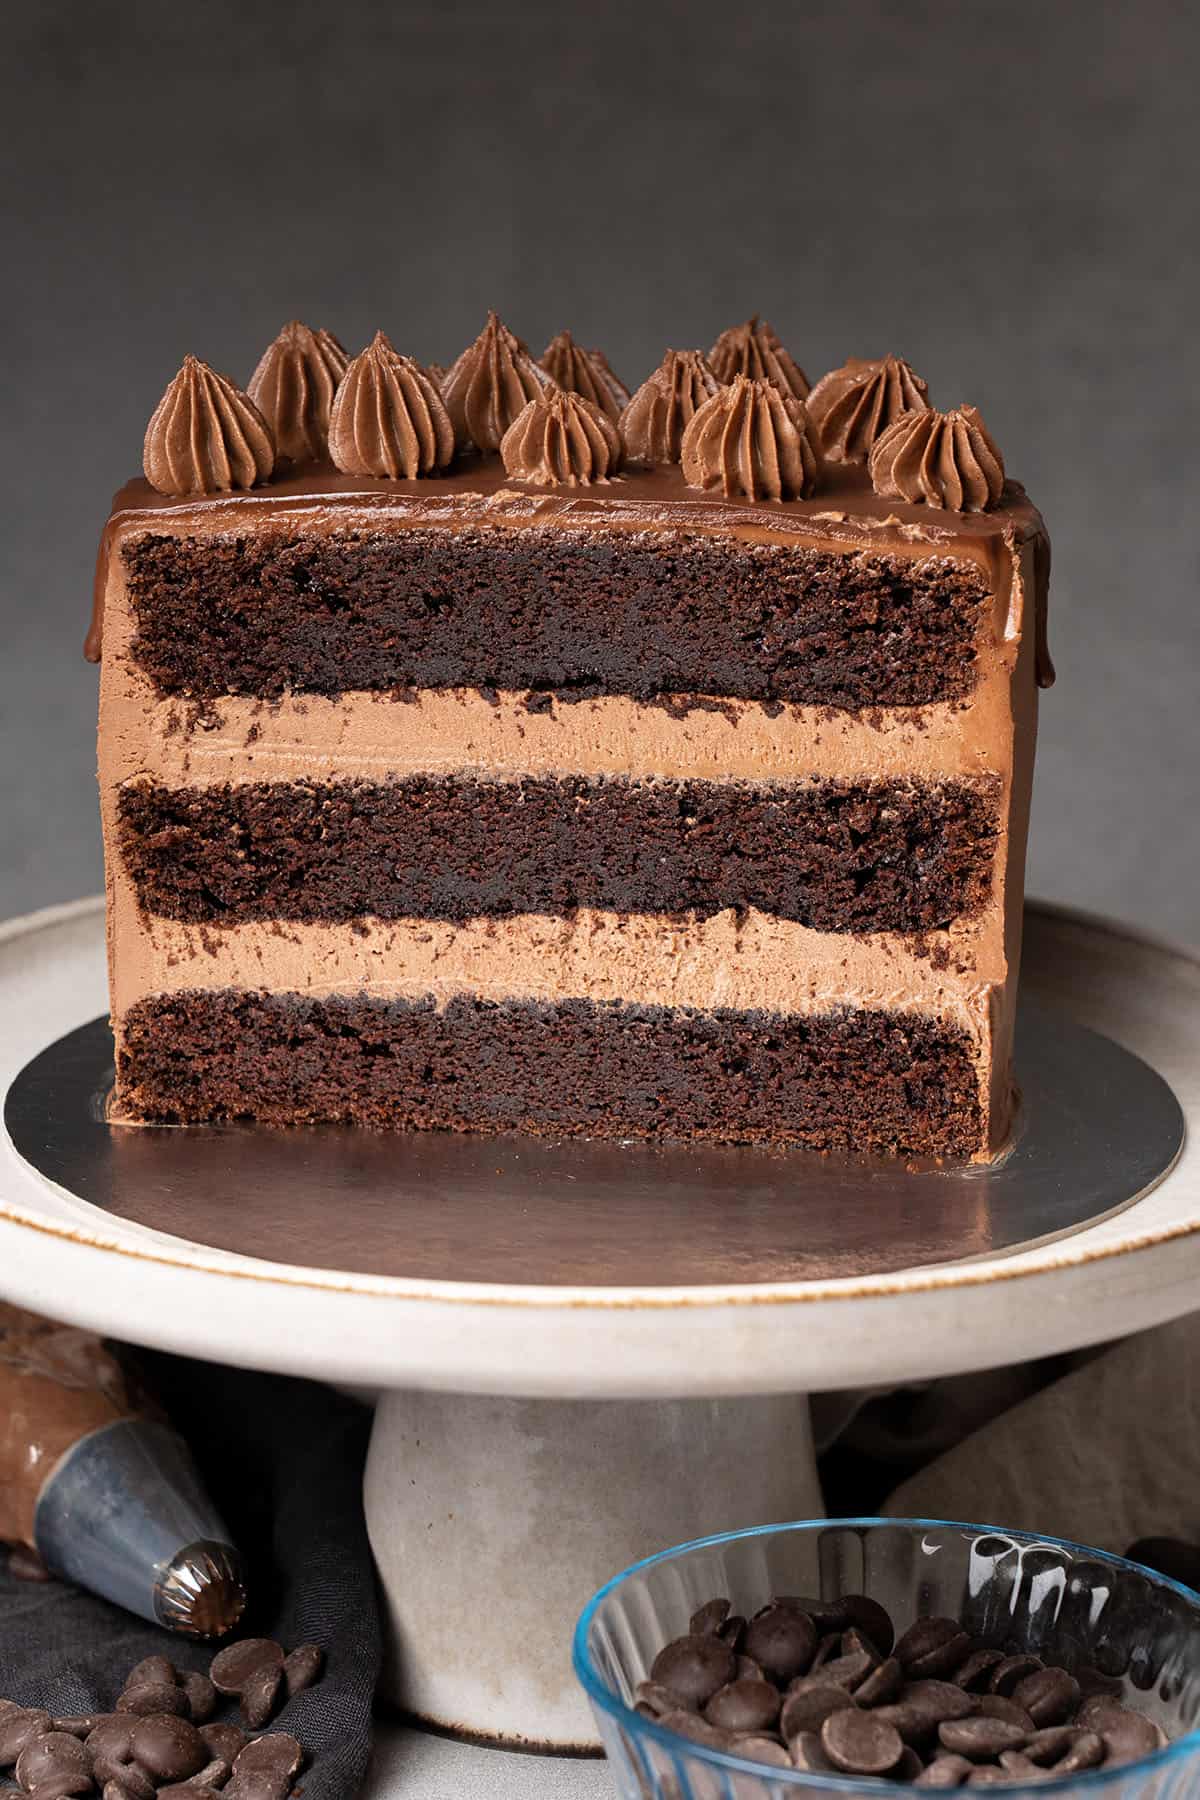 A half Triple chocolate cake.